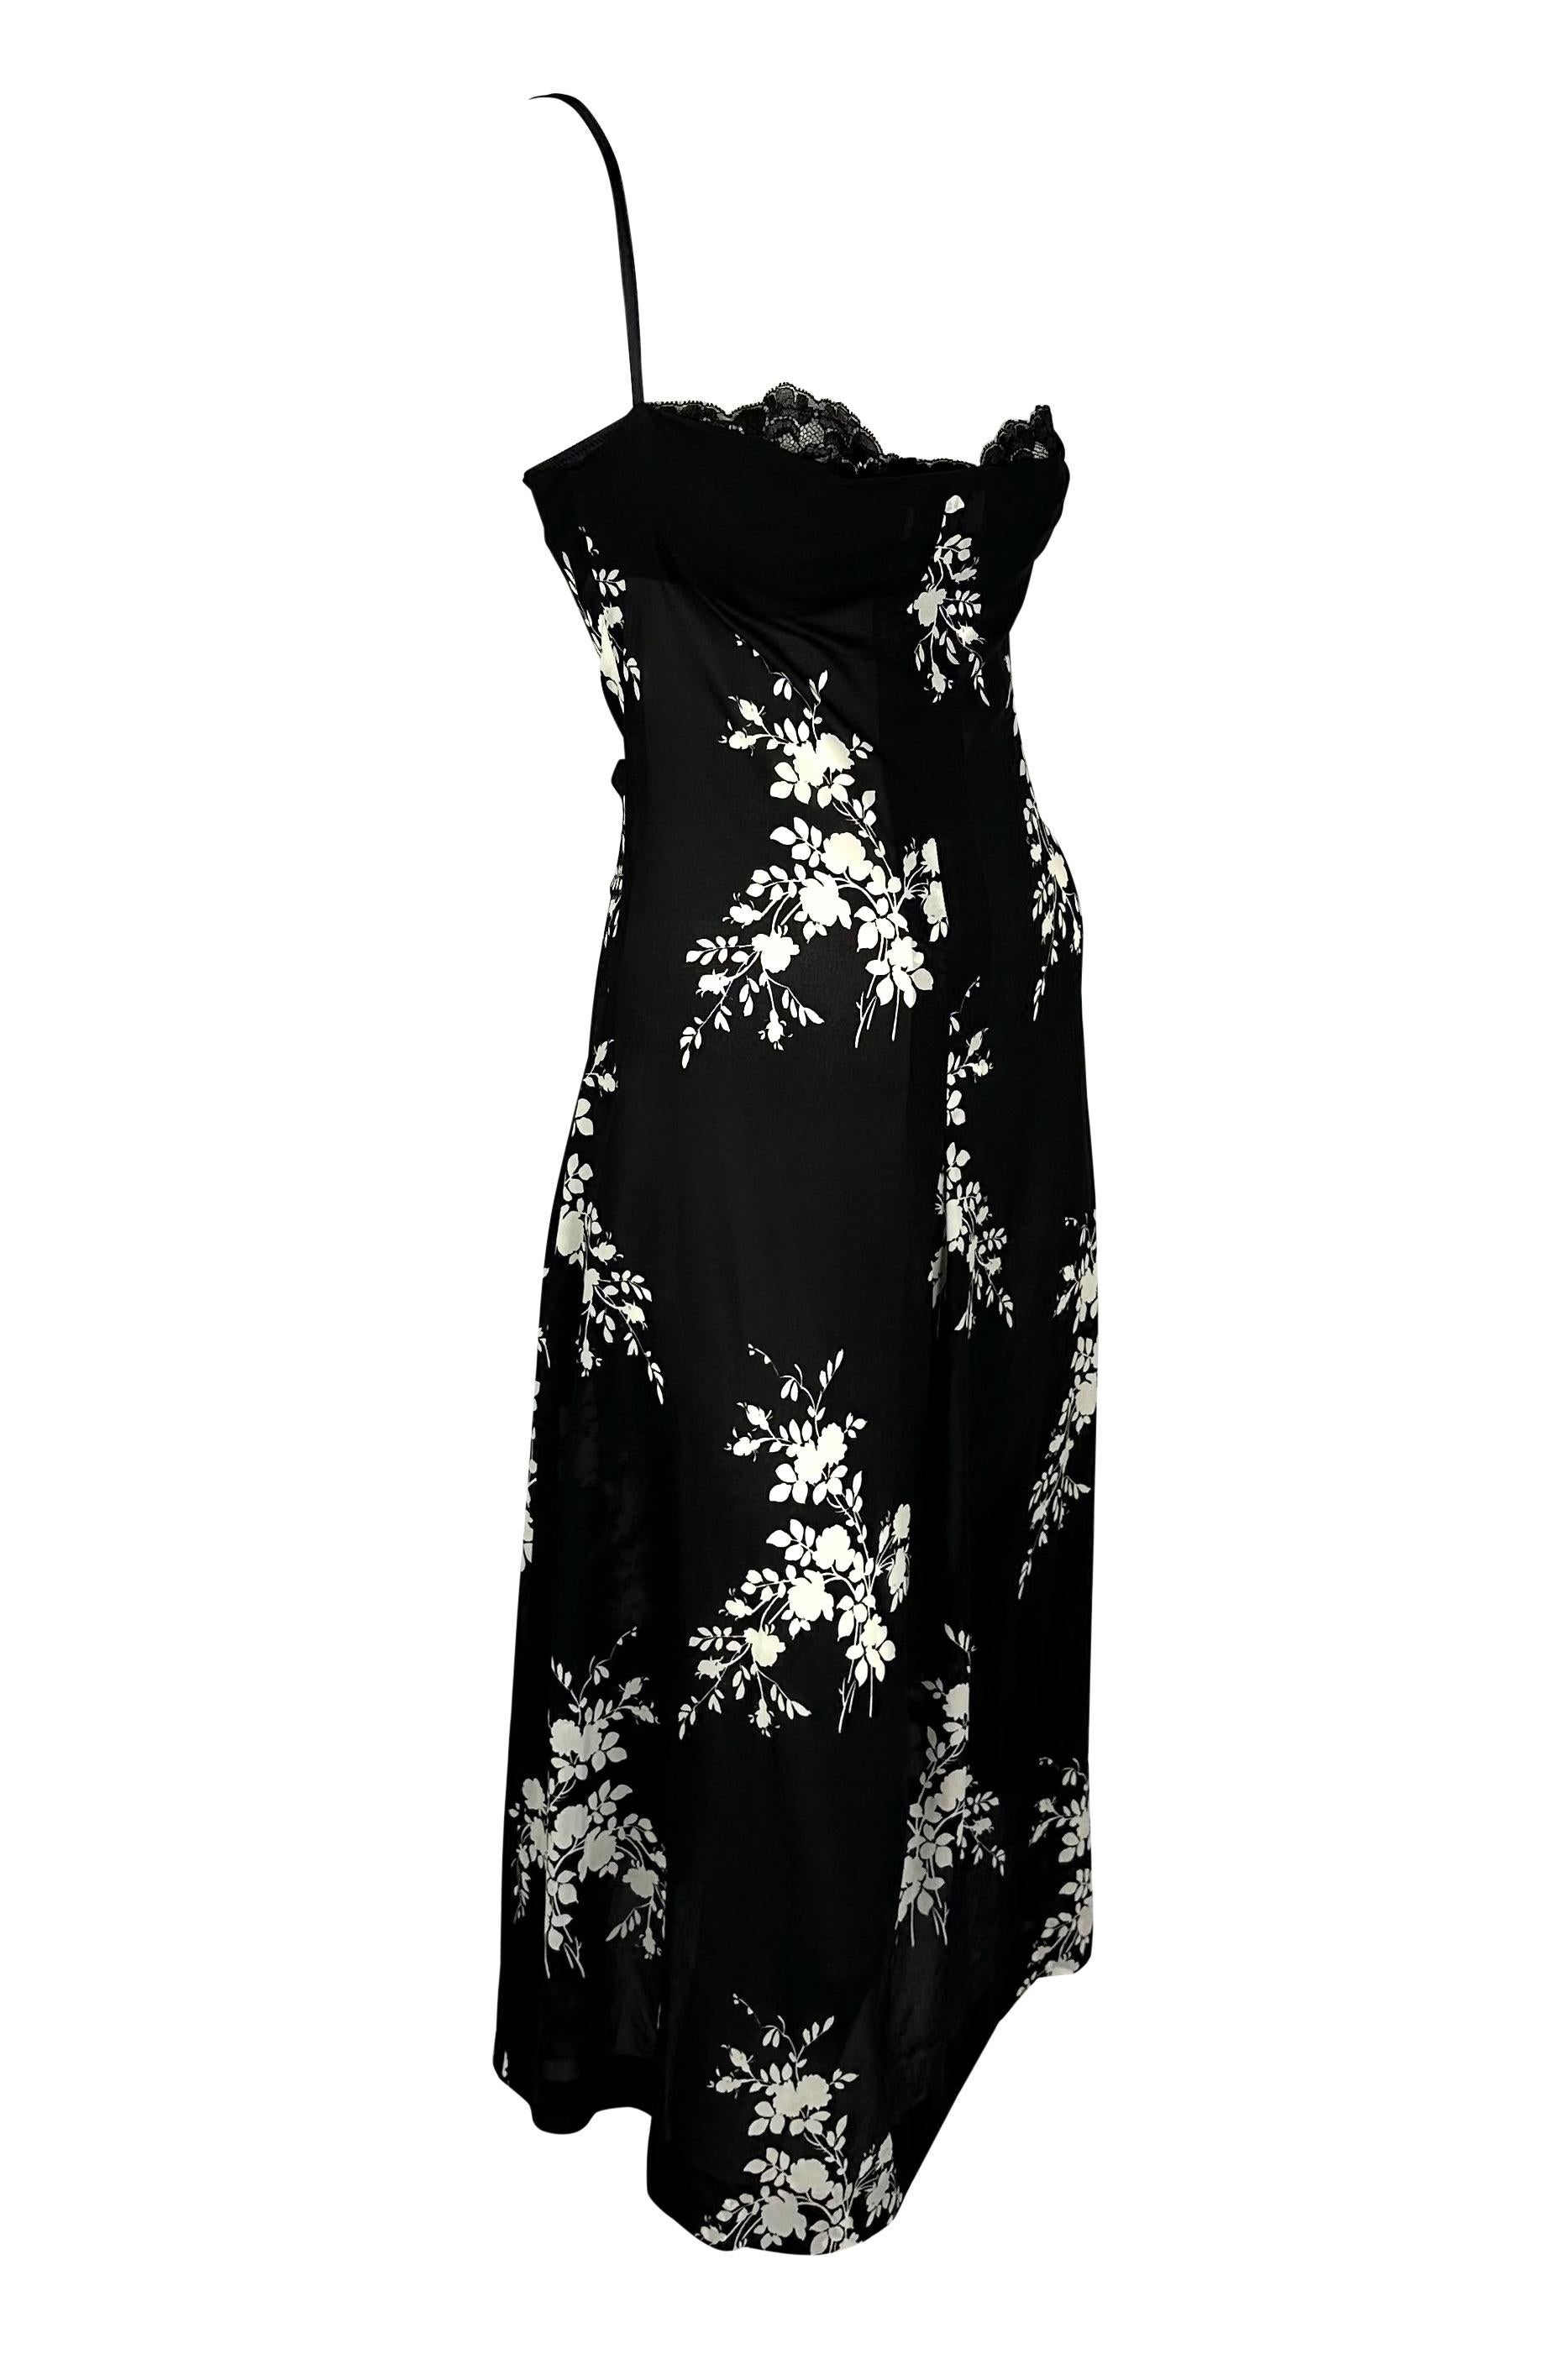 S/S 2002 Dolce & Gabbana Runway Sheer Black Stretch Silk Floral Bustier Dress 5